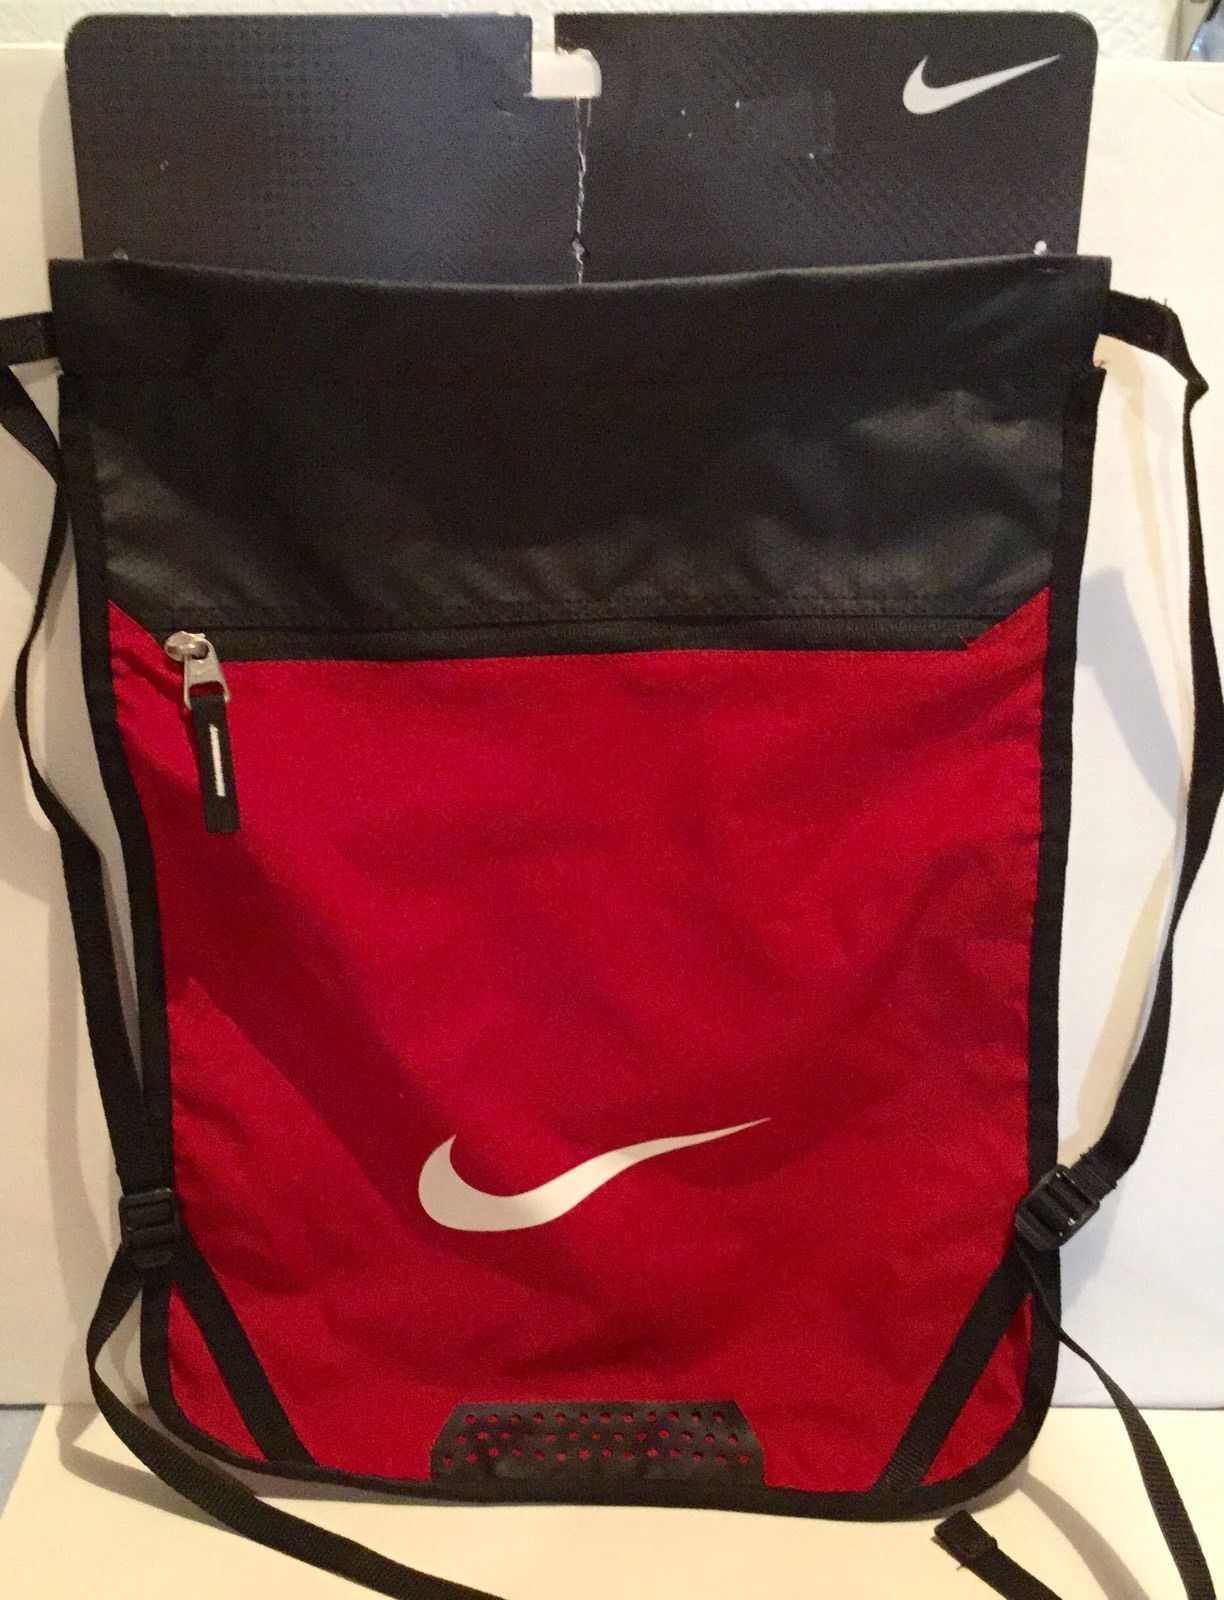 Nike Team Training RED Gymsack With SWOOSH Logo - Sports, Gym School Or Work NEW - $17.94